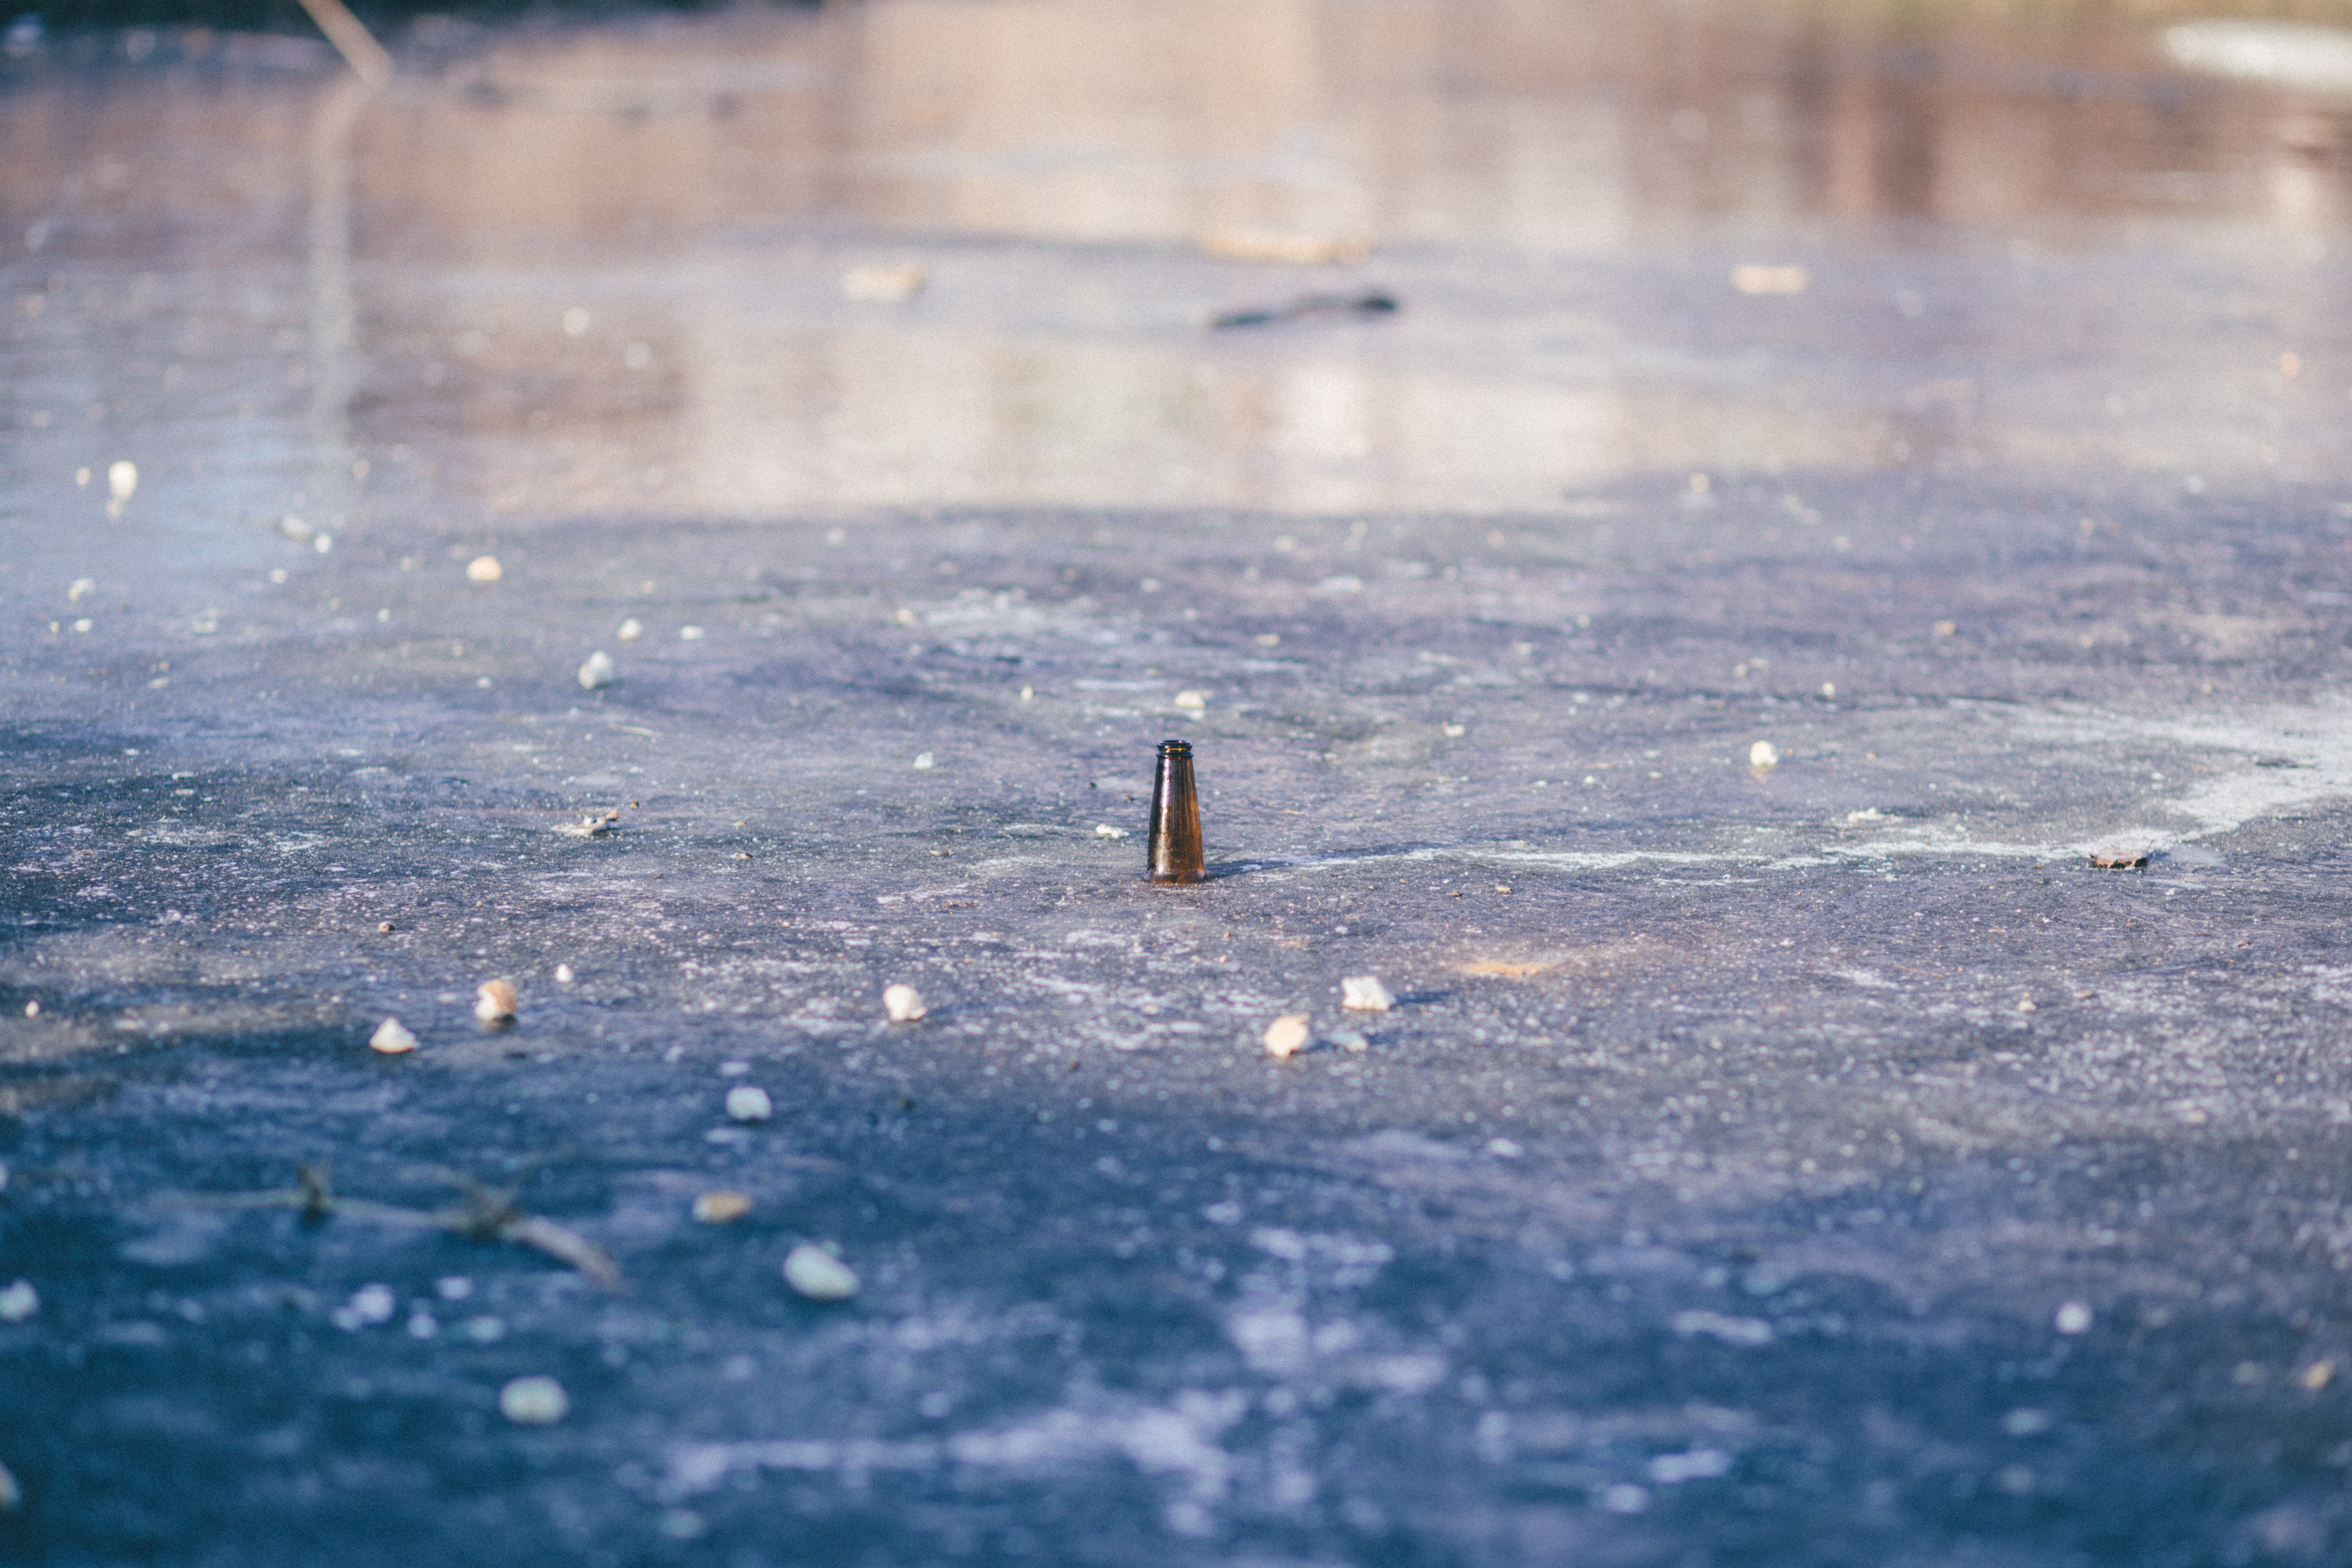 Beer bottle in a frozen pond - freestocks.org - Free stock photo